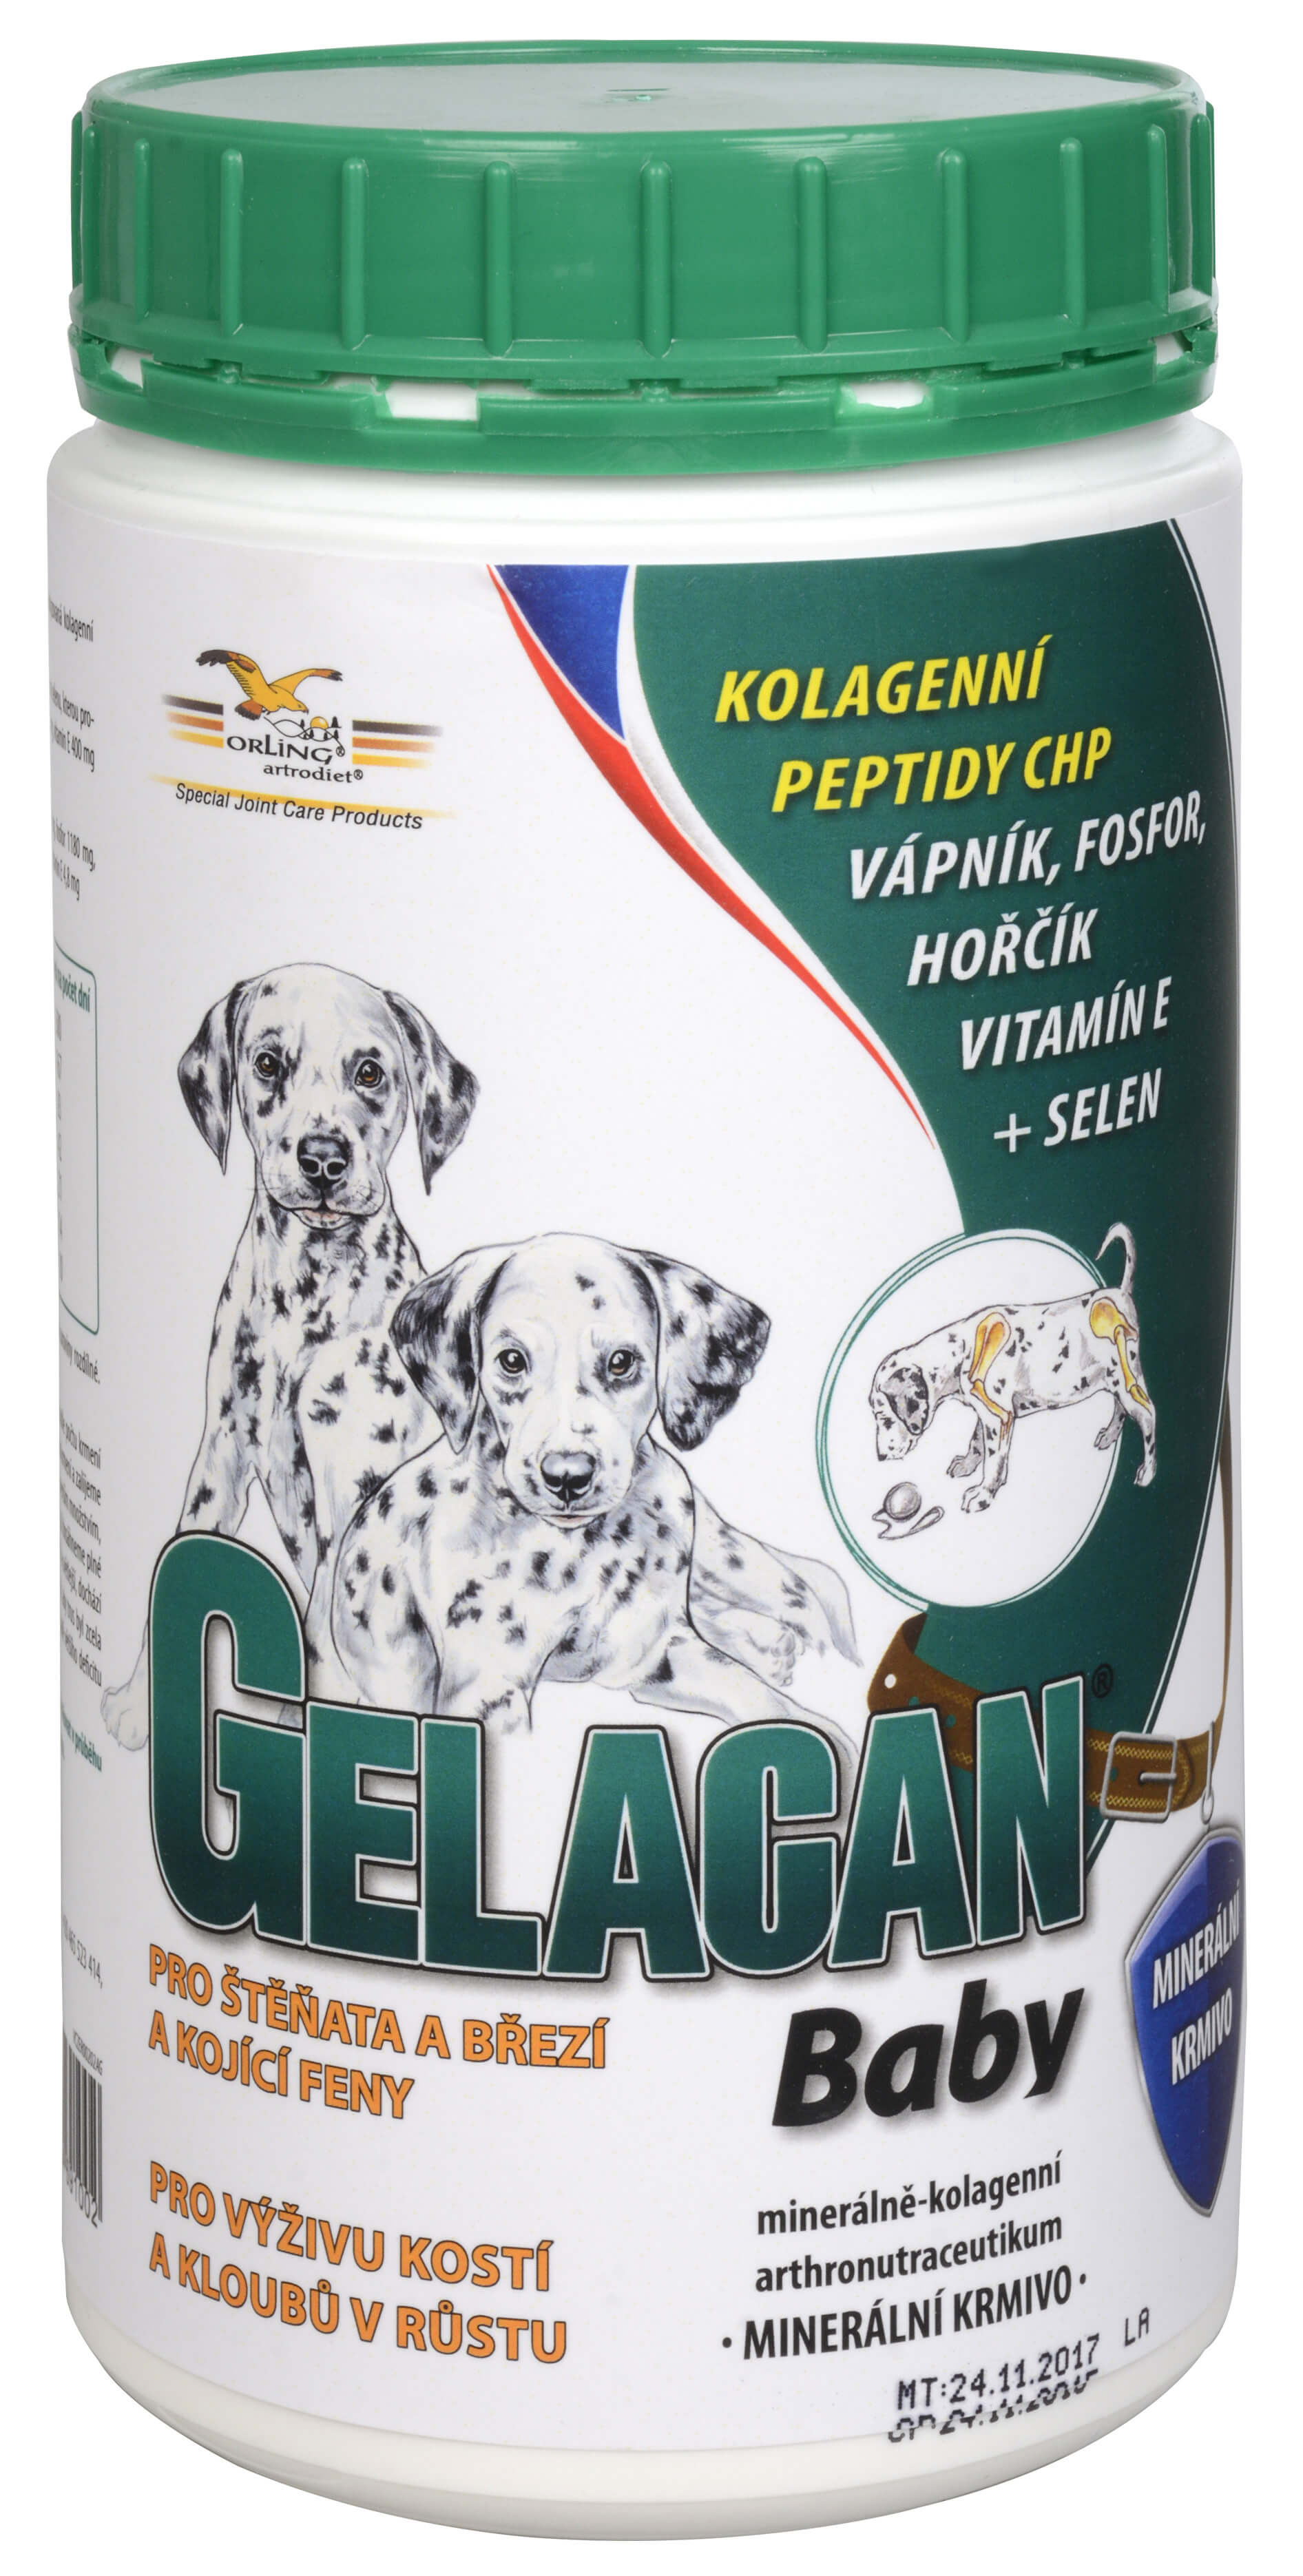 Zobrazit detail výrobku GELACAN Gelacan Baby 150 g